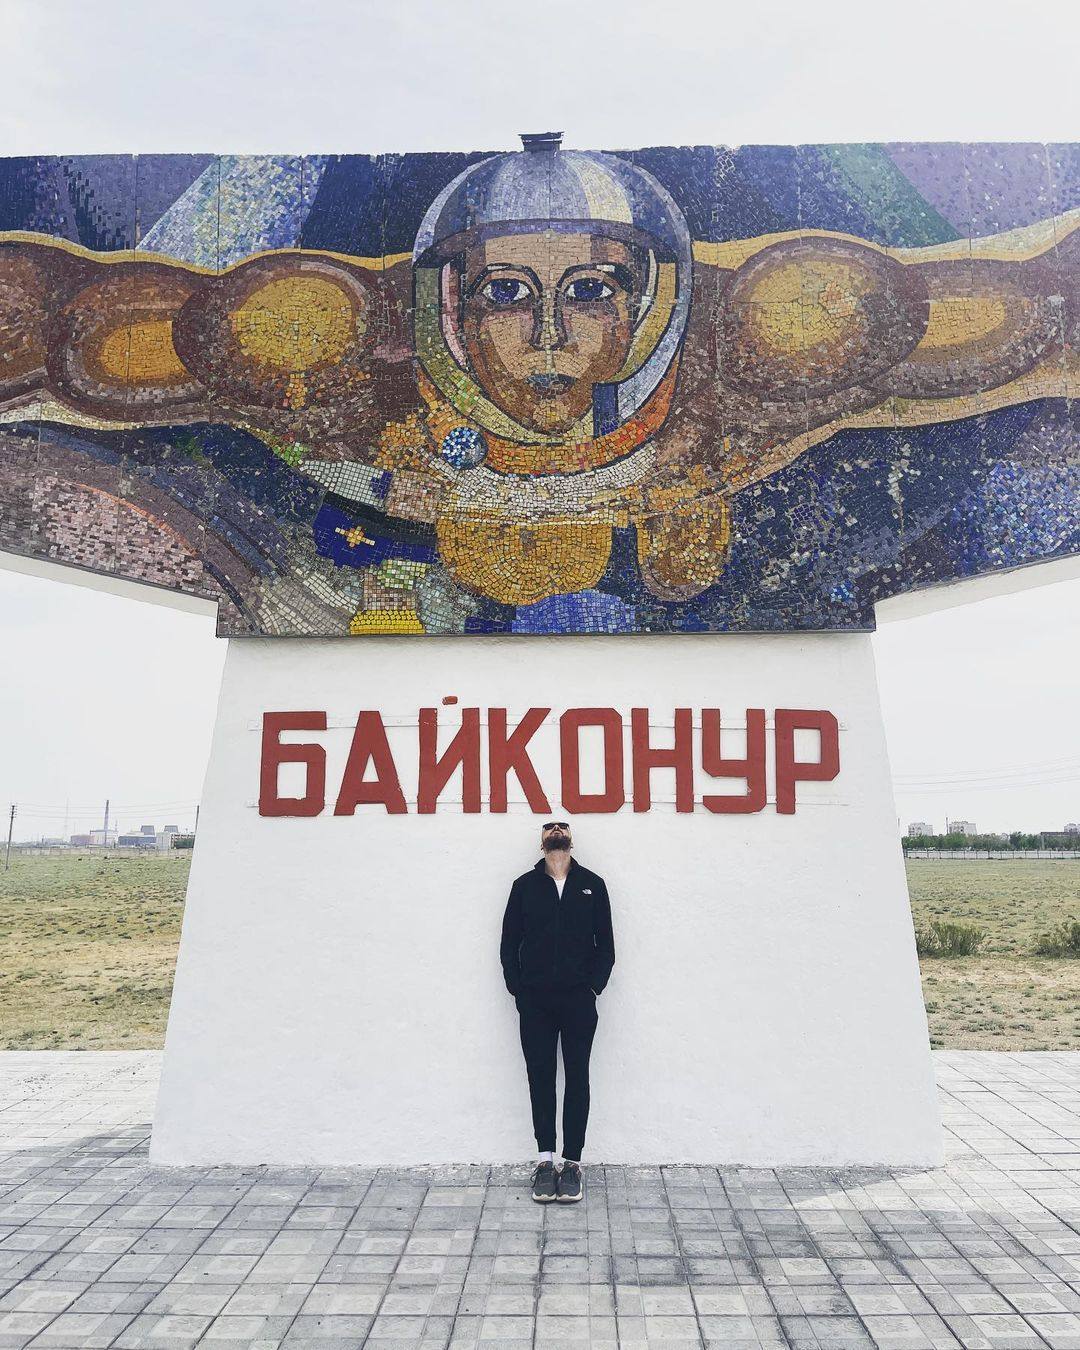 Benjamin Rich poses at the Baikonur Cosmodrome in Kazakhstan. Photo: Instagram/@realbaldandbankrupt